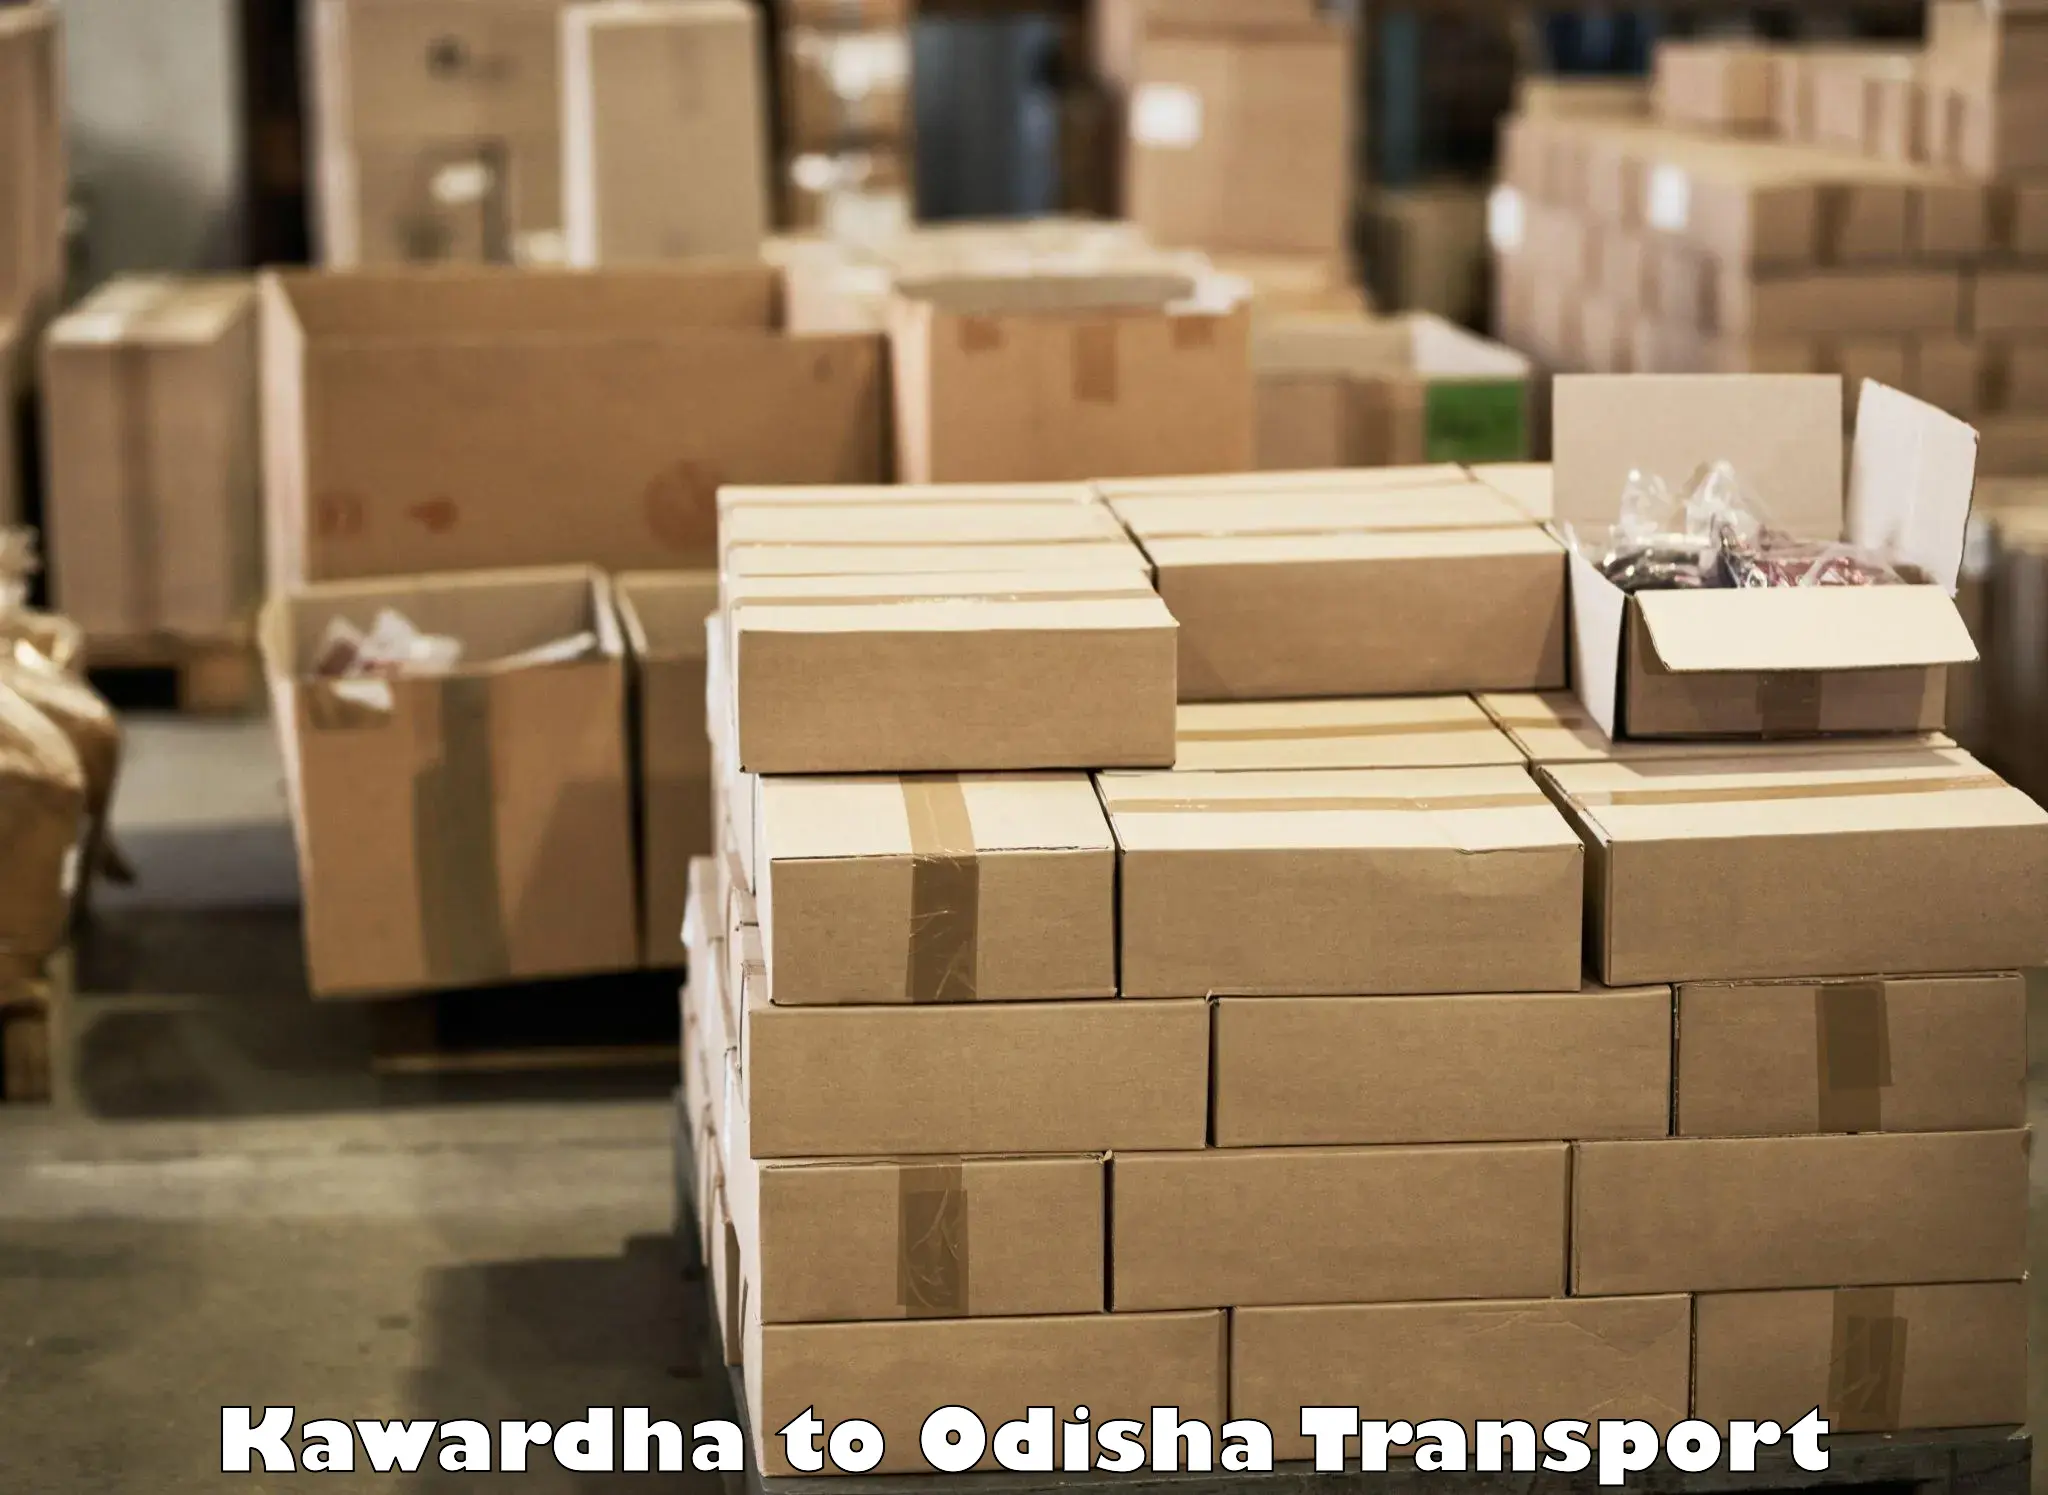 Container transport service Kawardha to Mathili